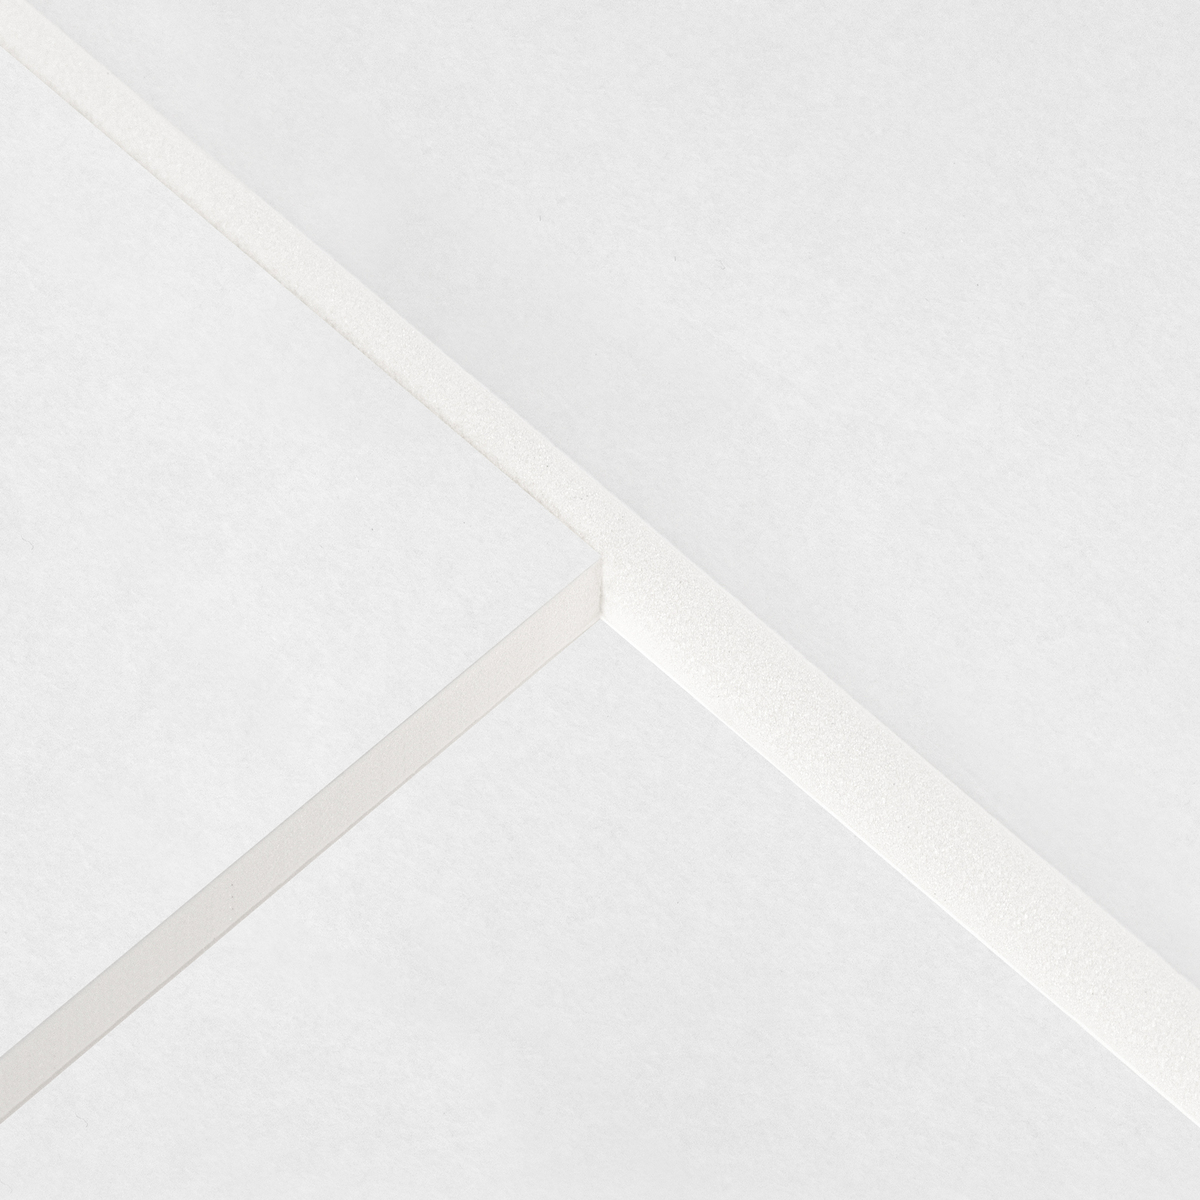 KAPA® plast White Core (Leichtschaumplatten)